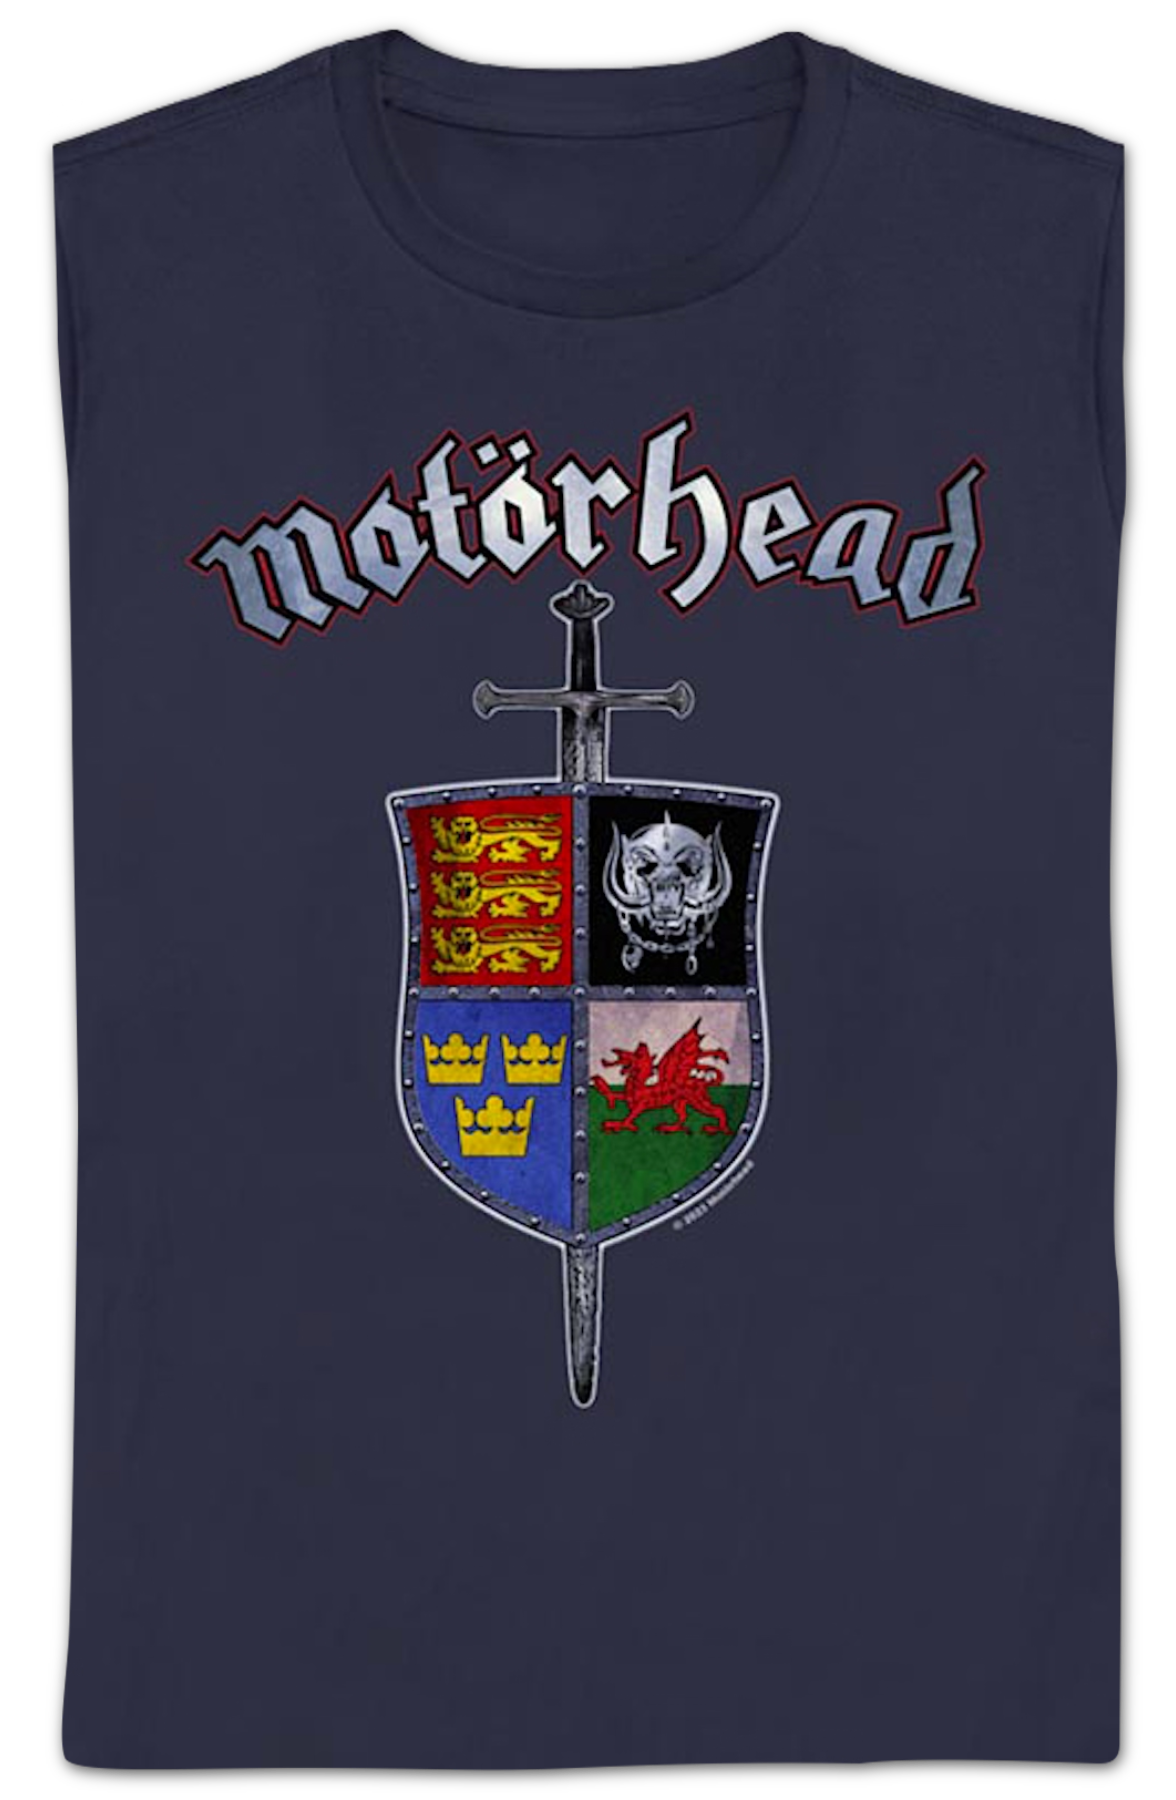 Womens Sword & Shield Crest Motorhead Shirt